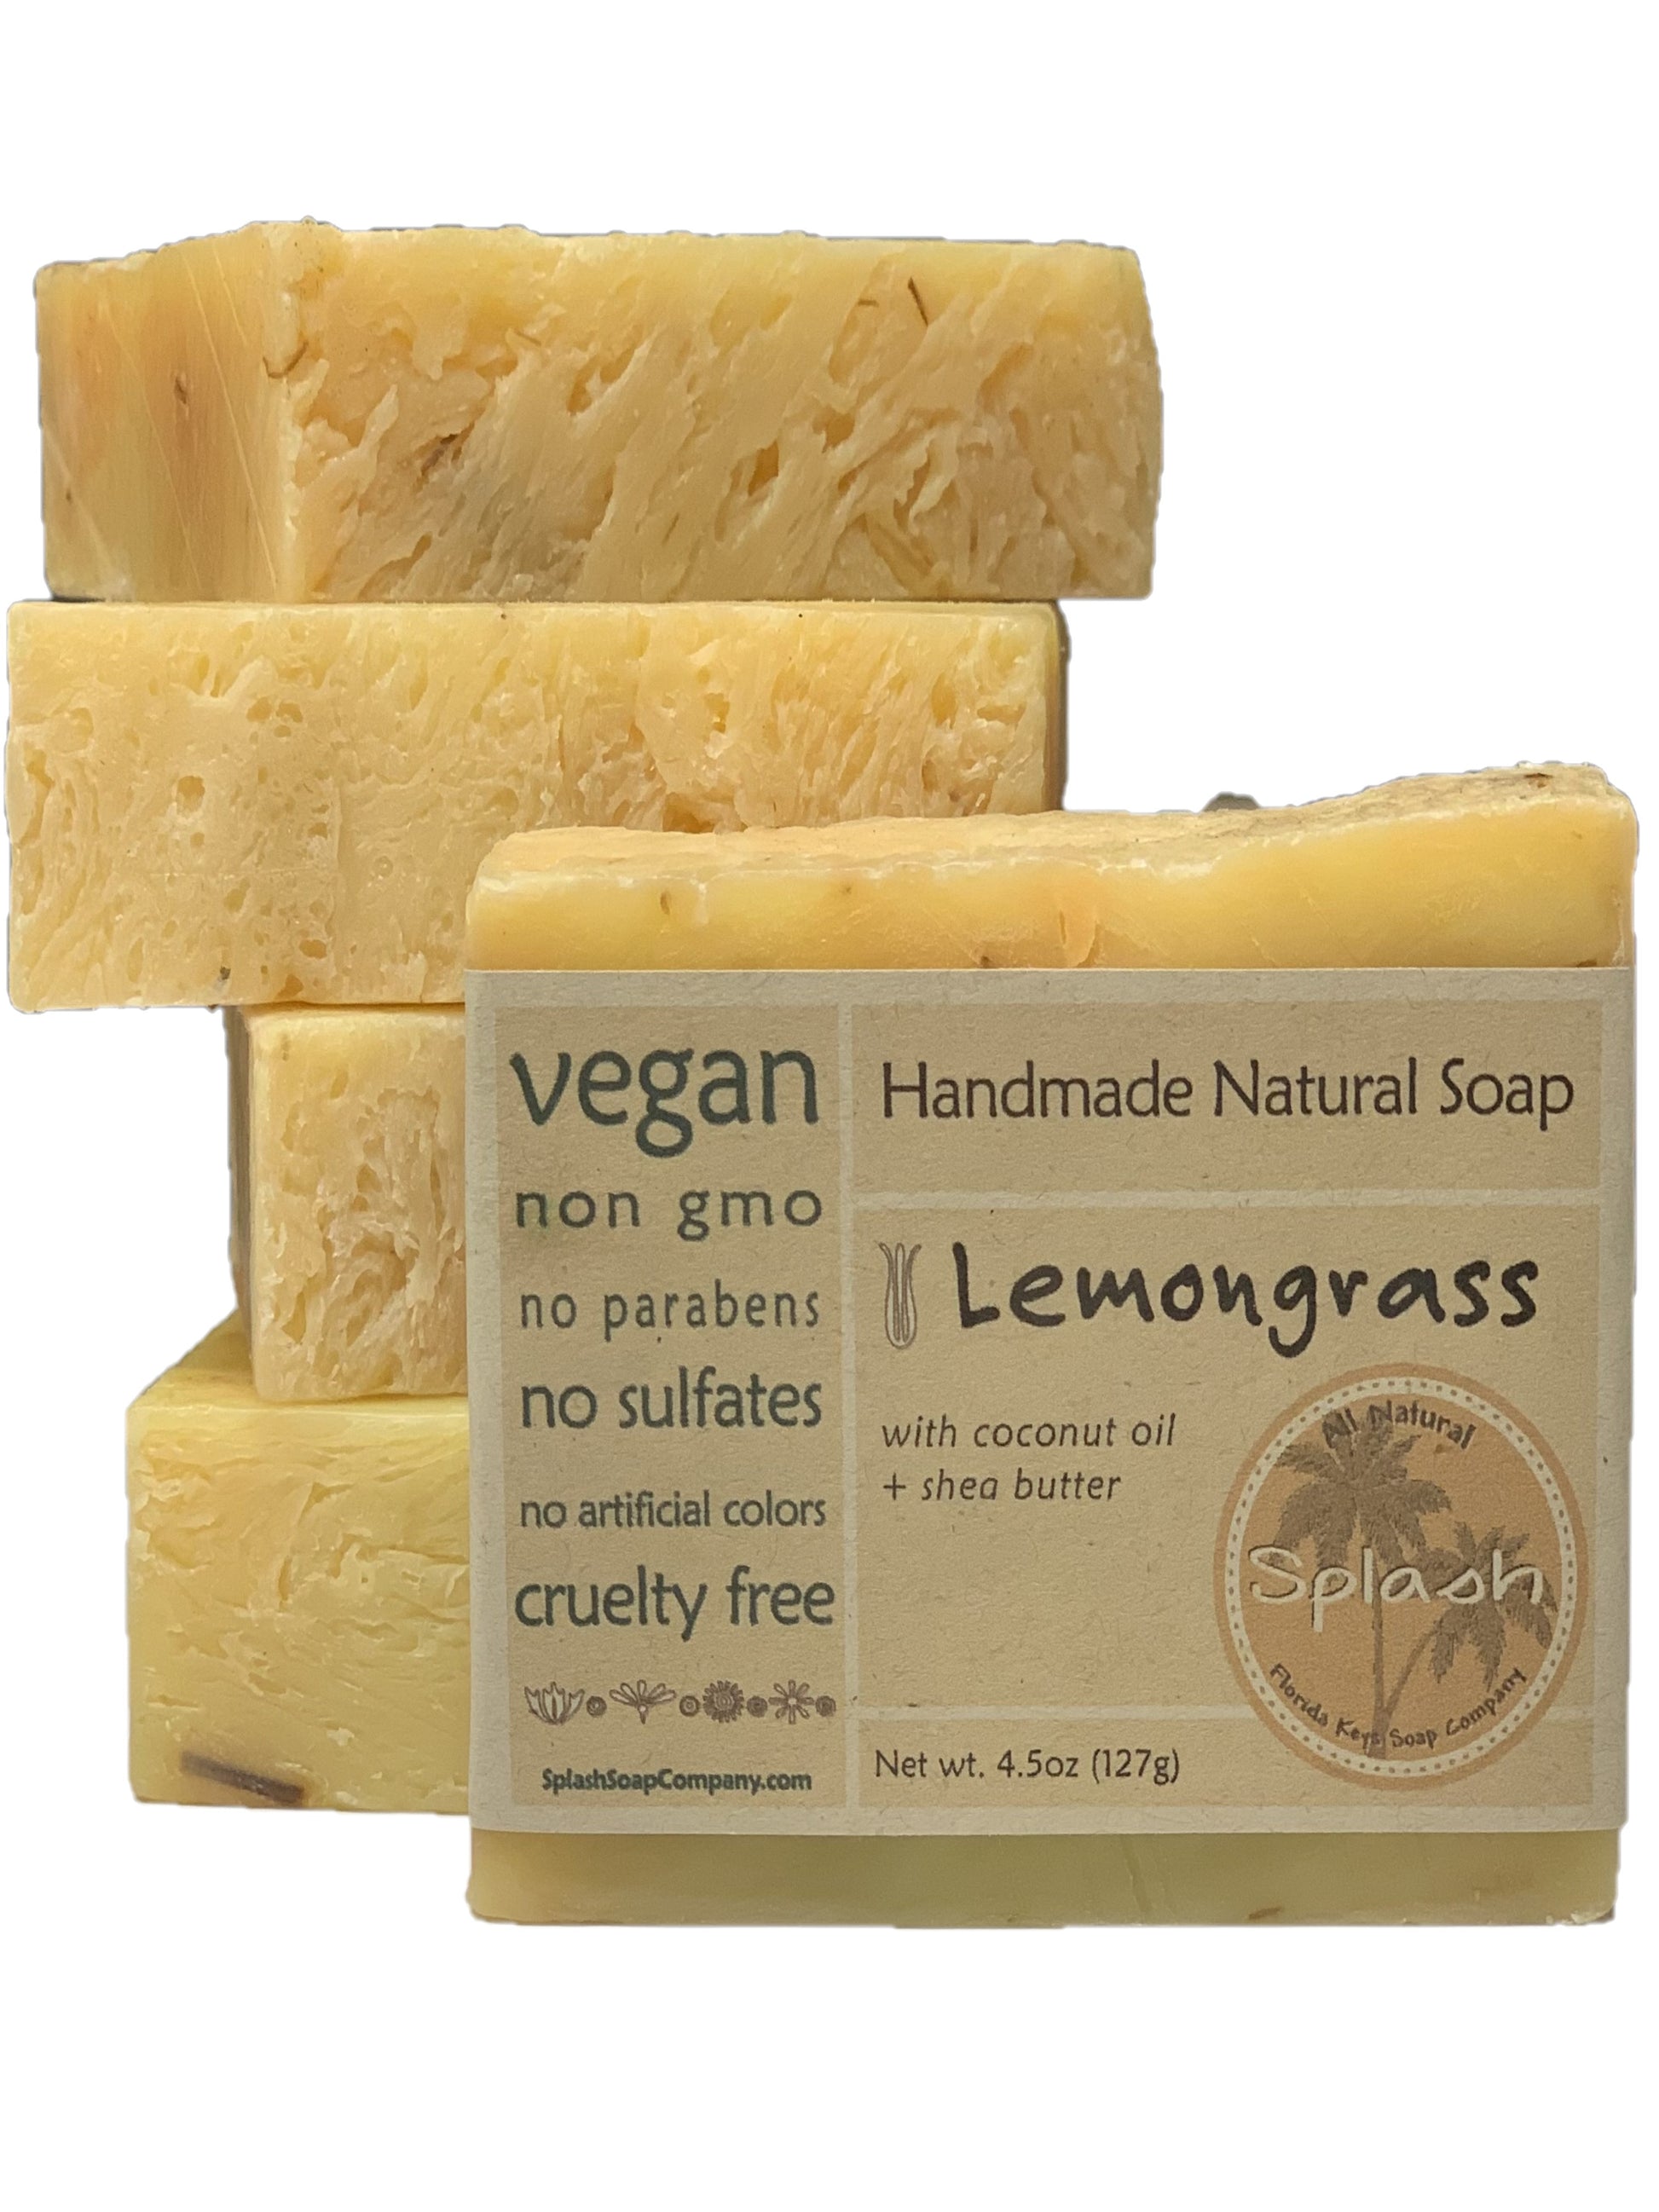 Lemongrass - Splash Soap Company